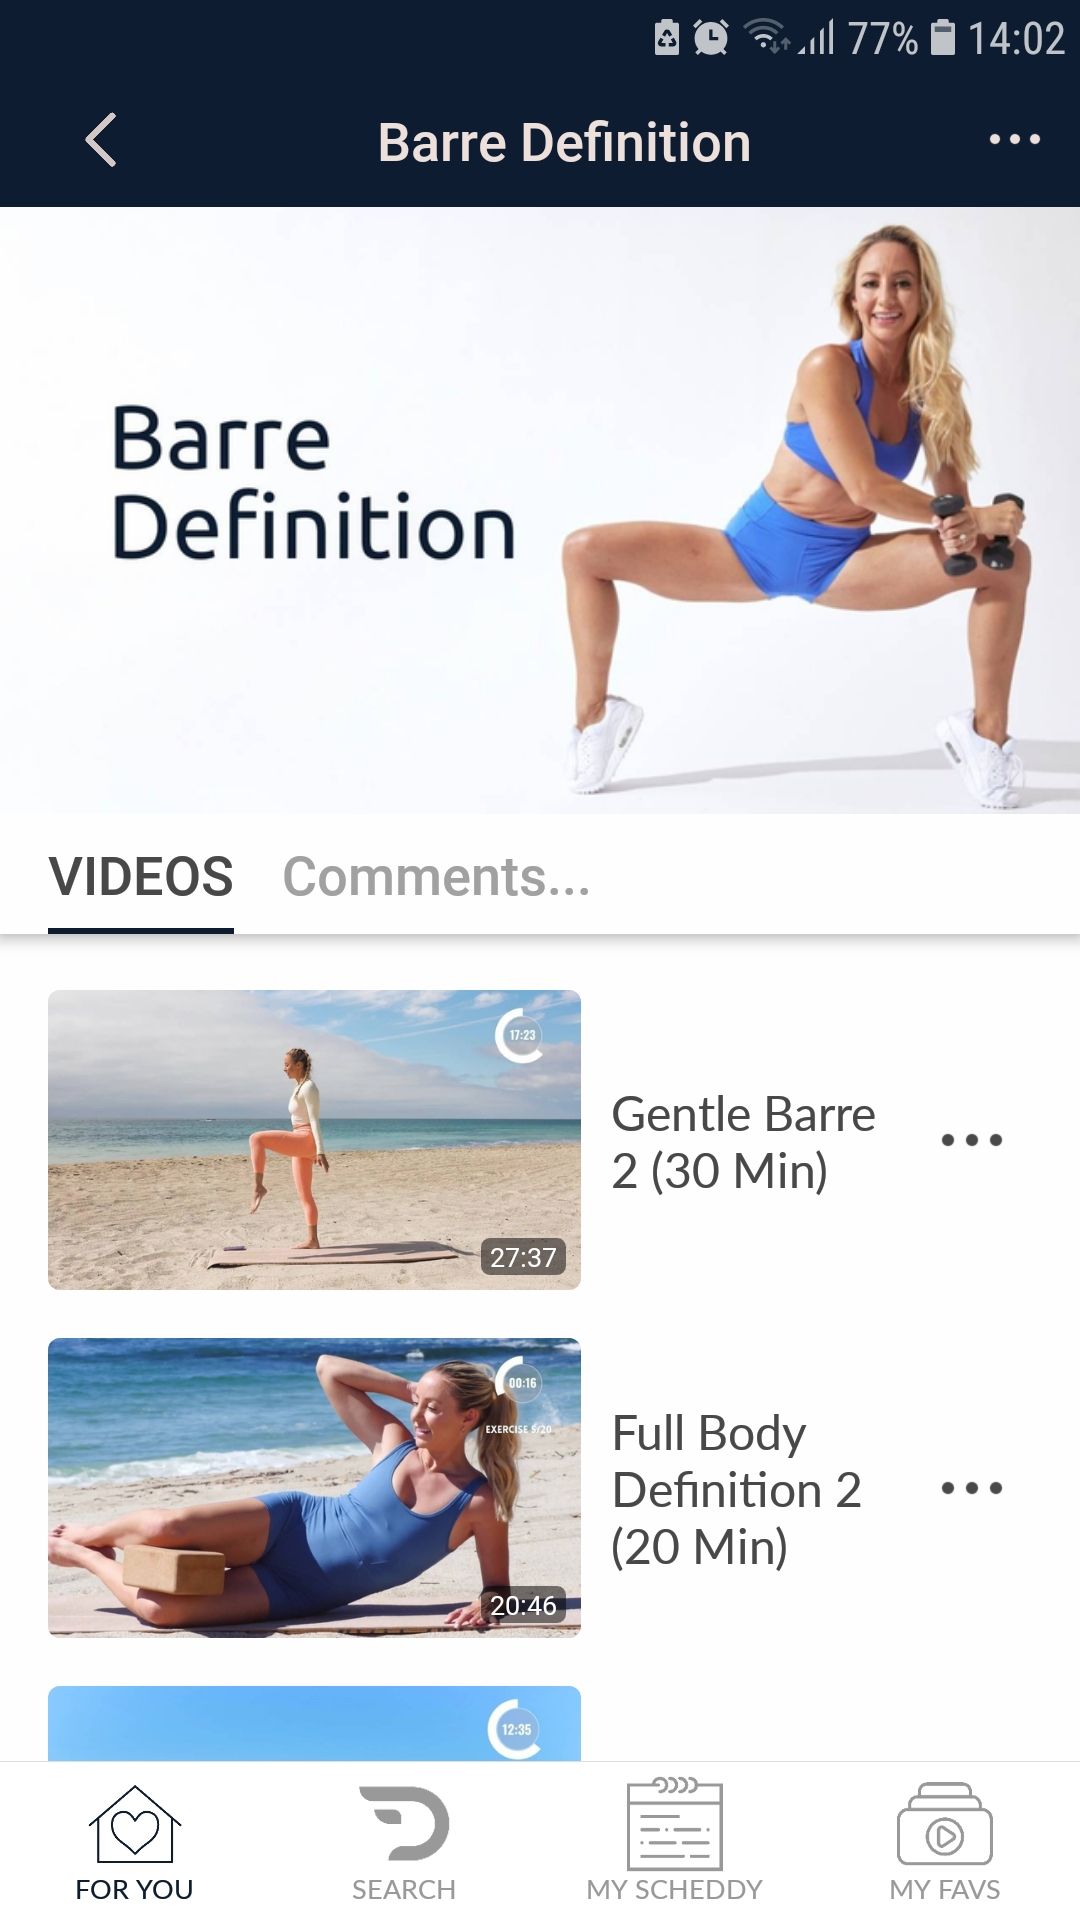 Barre Definition mobile workout app